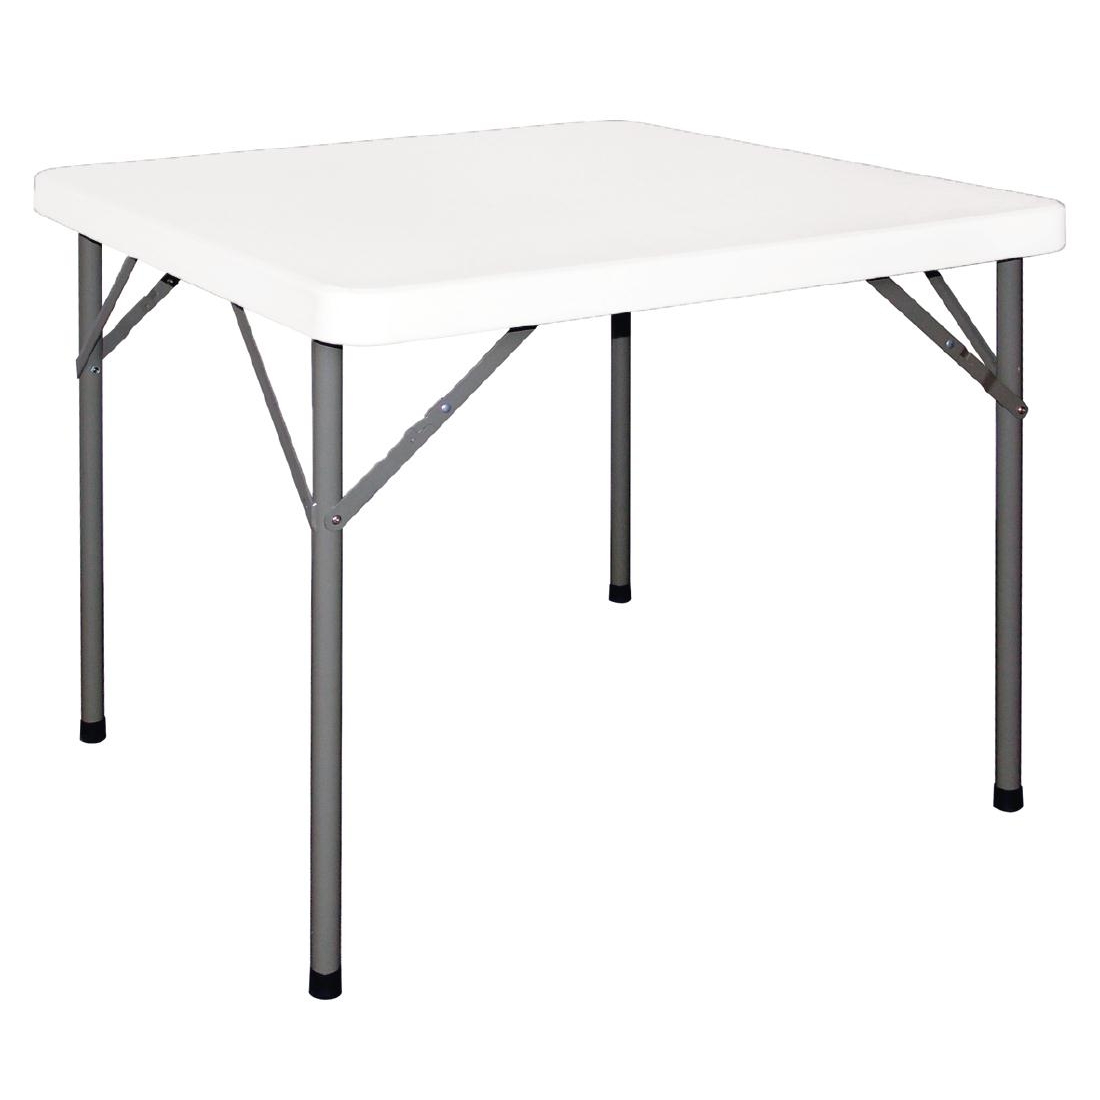 Bolero Foldaway Square Table